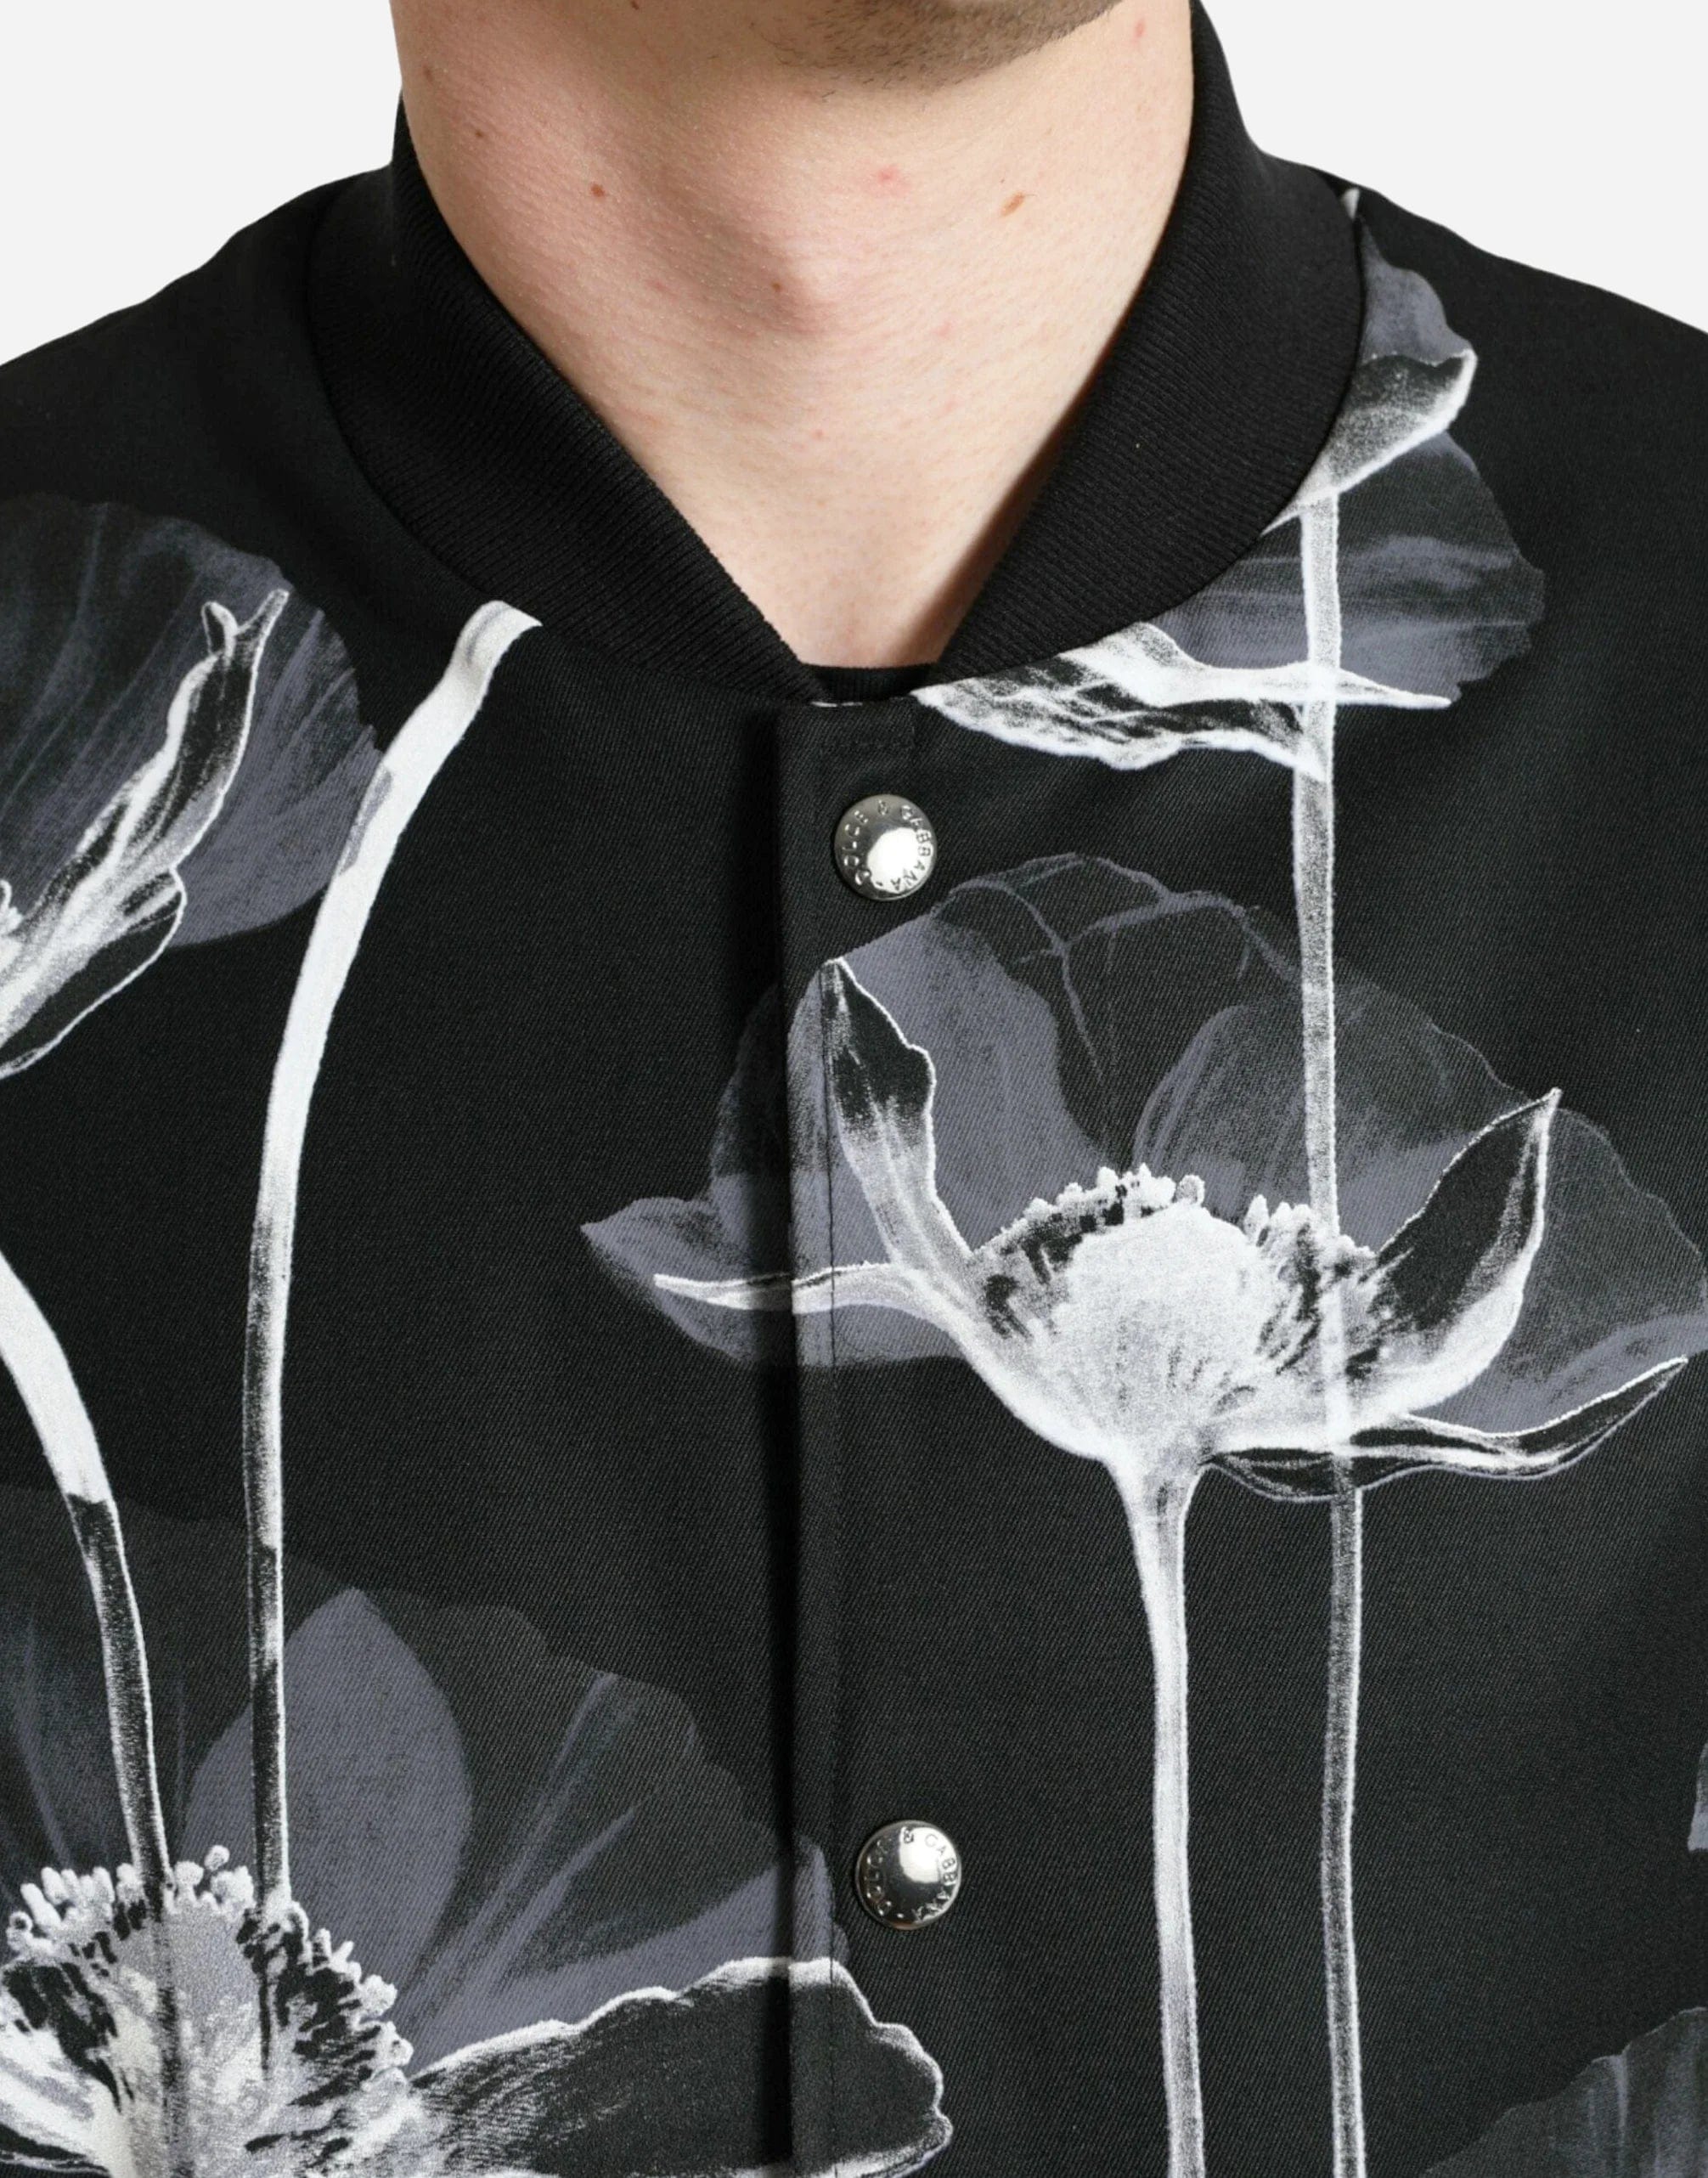 Dolce & Gabbana Floral Print Bomber Jacket